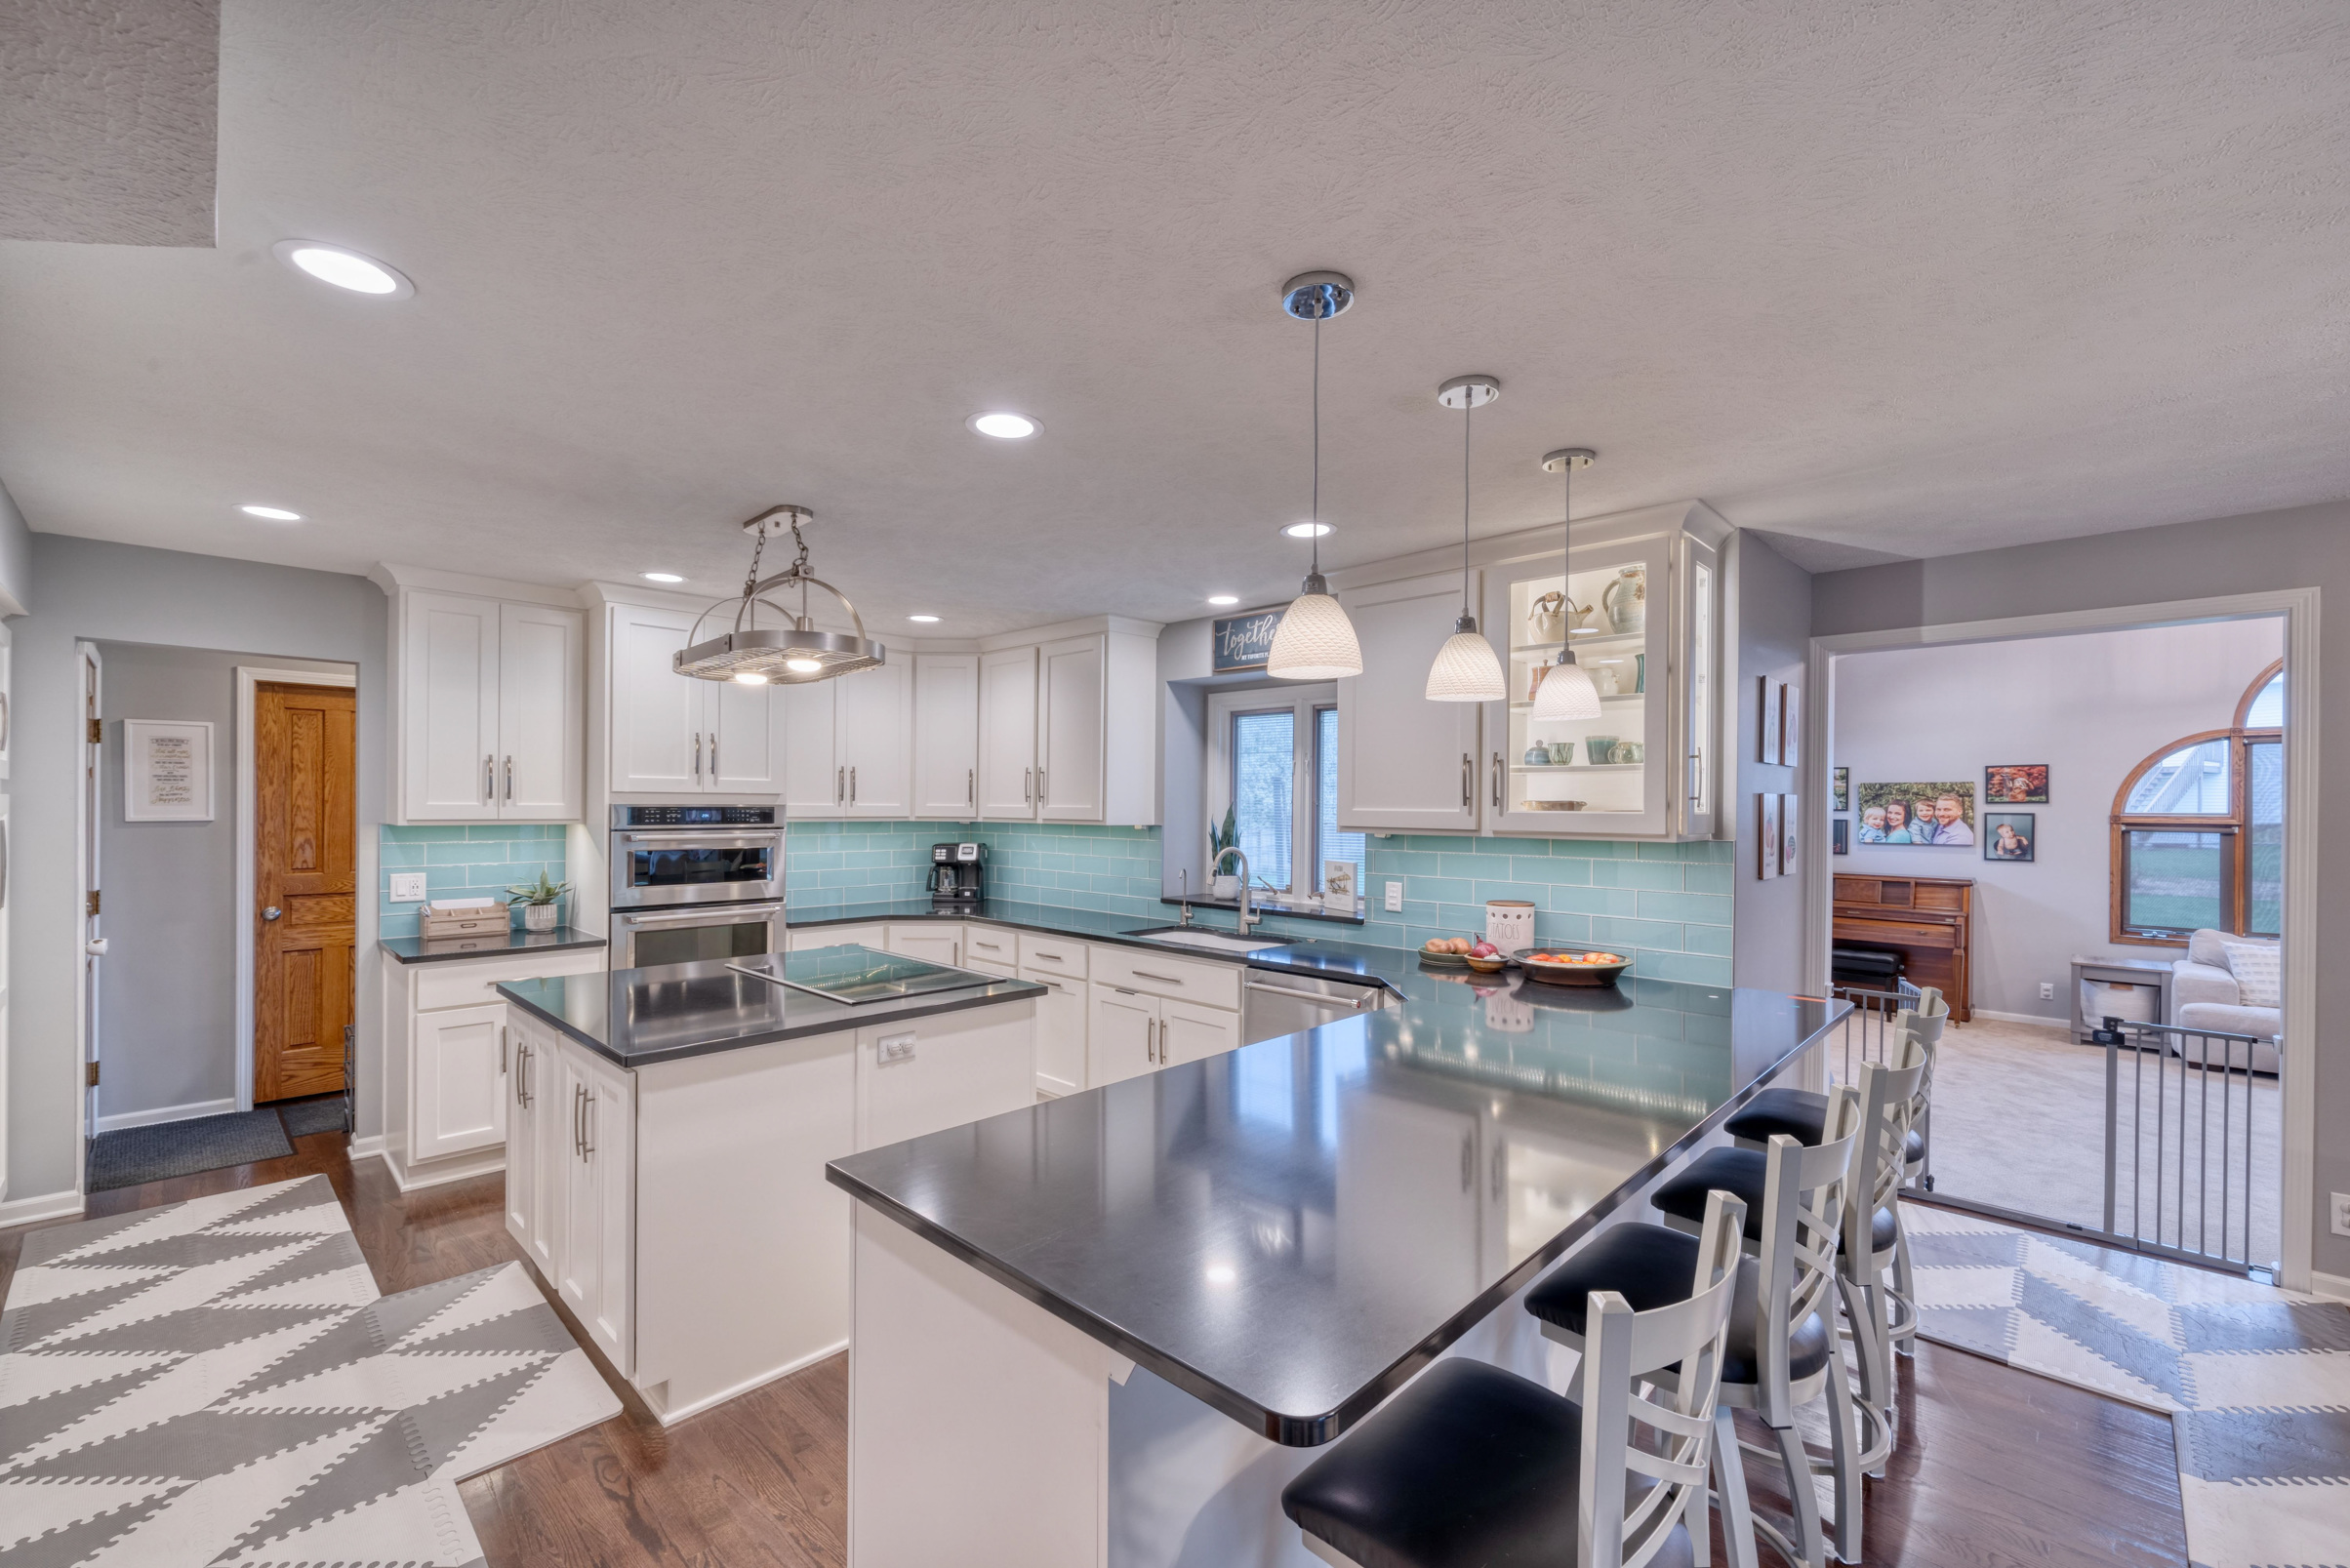 Kitchen with white cabinets and blue tile backsplash